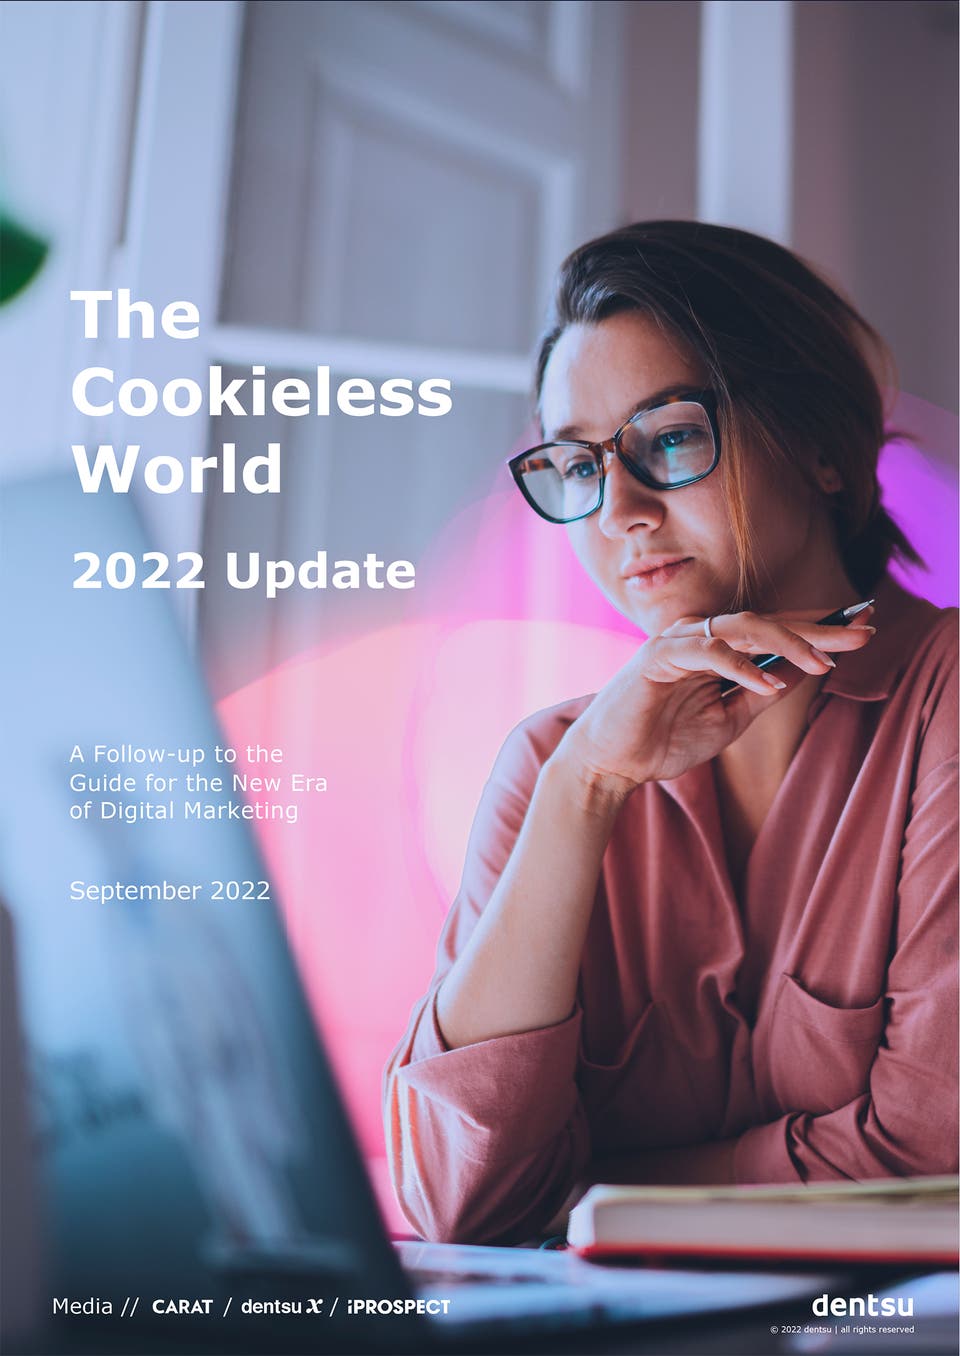 The Cookieless World 2022 Update